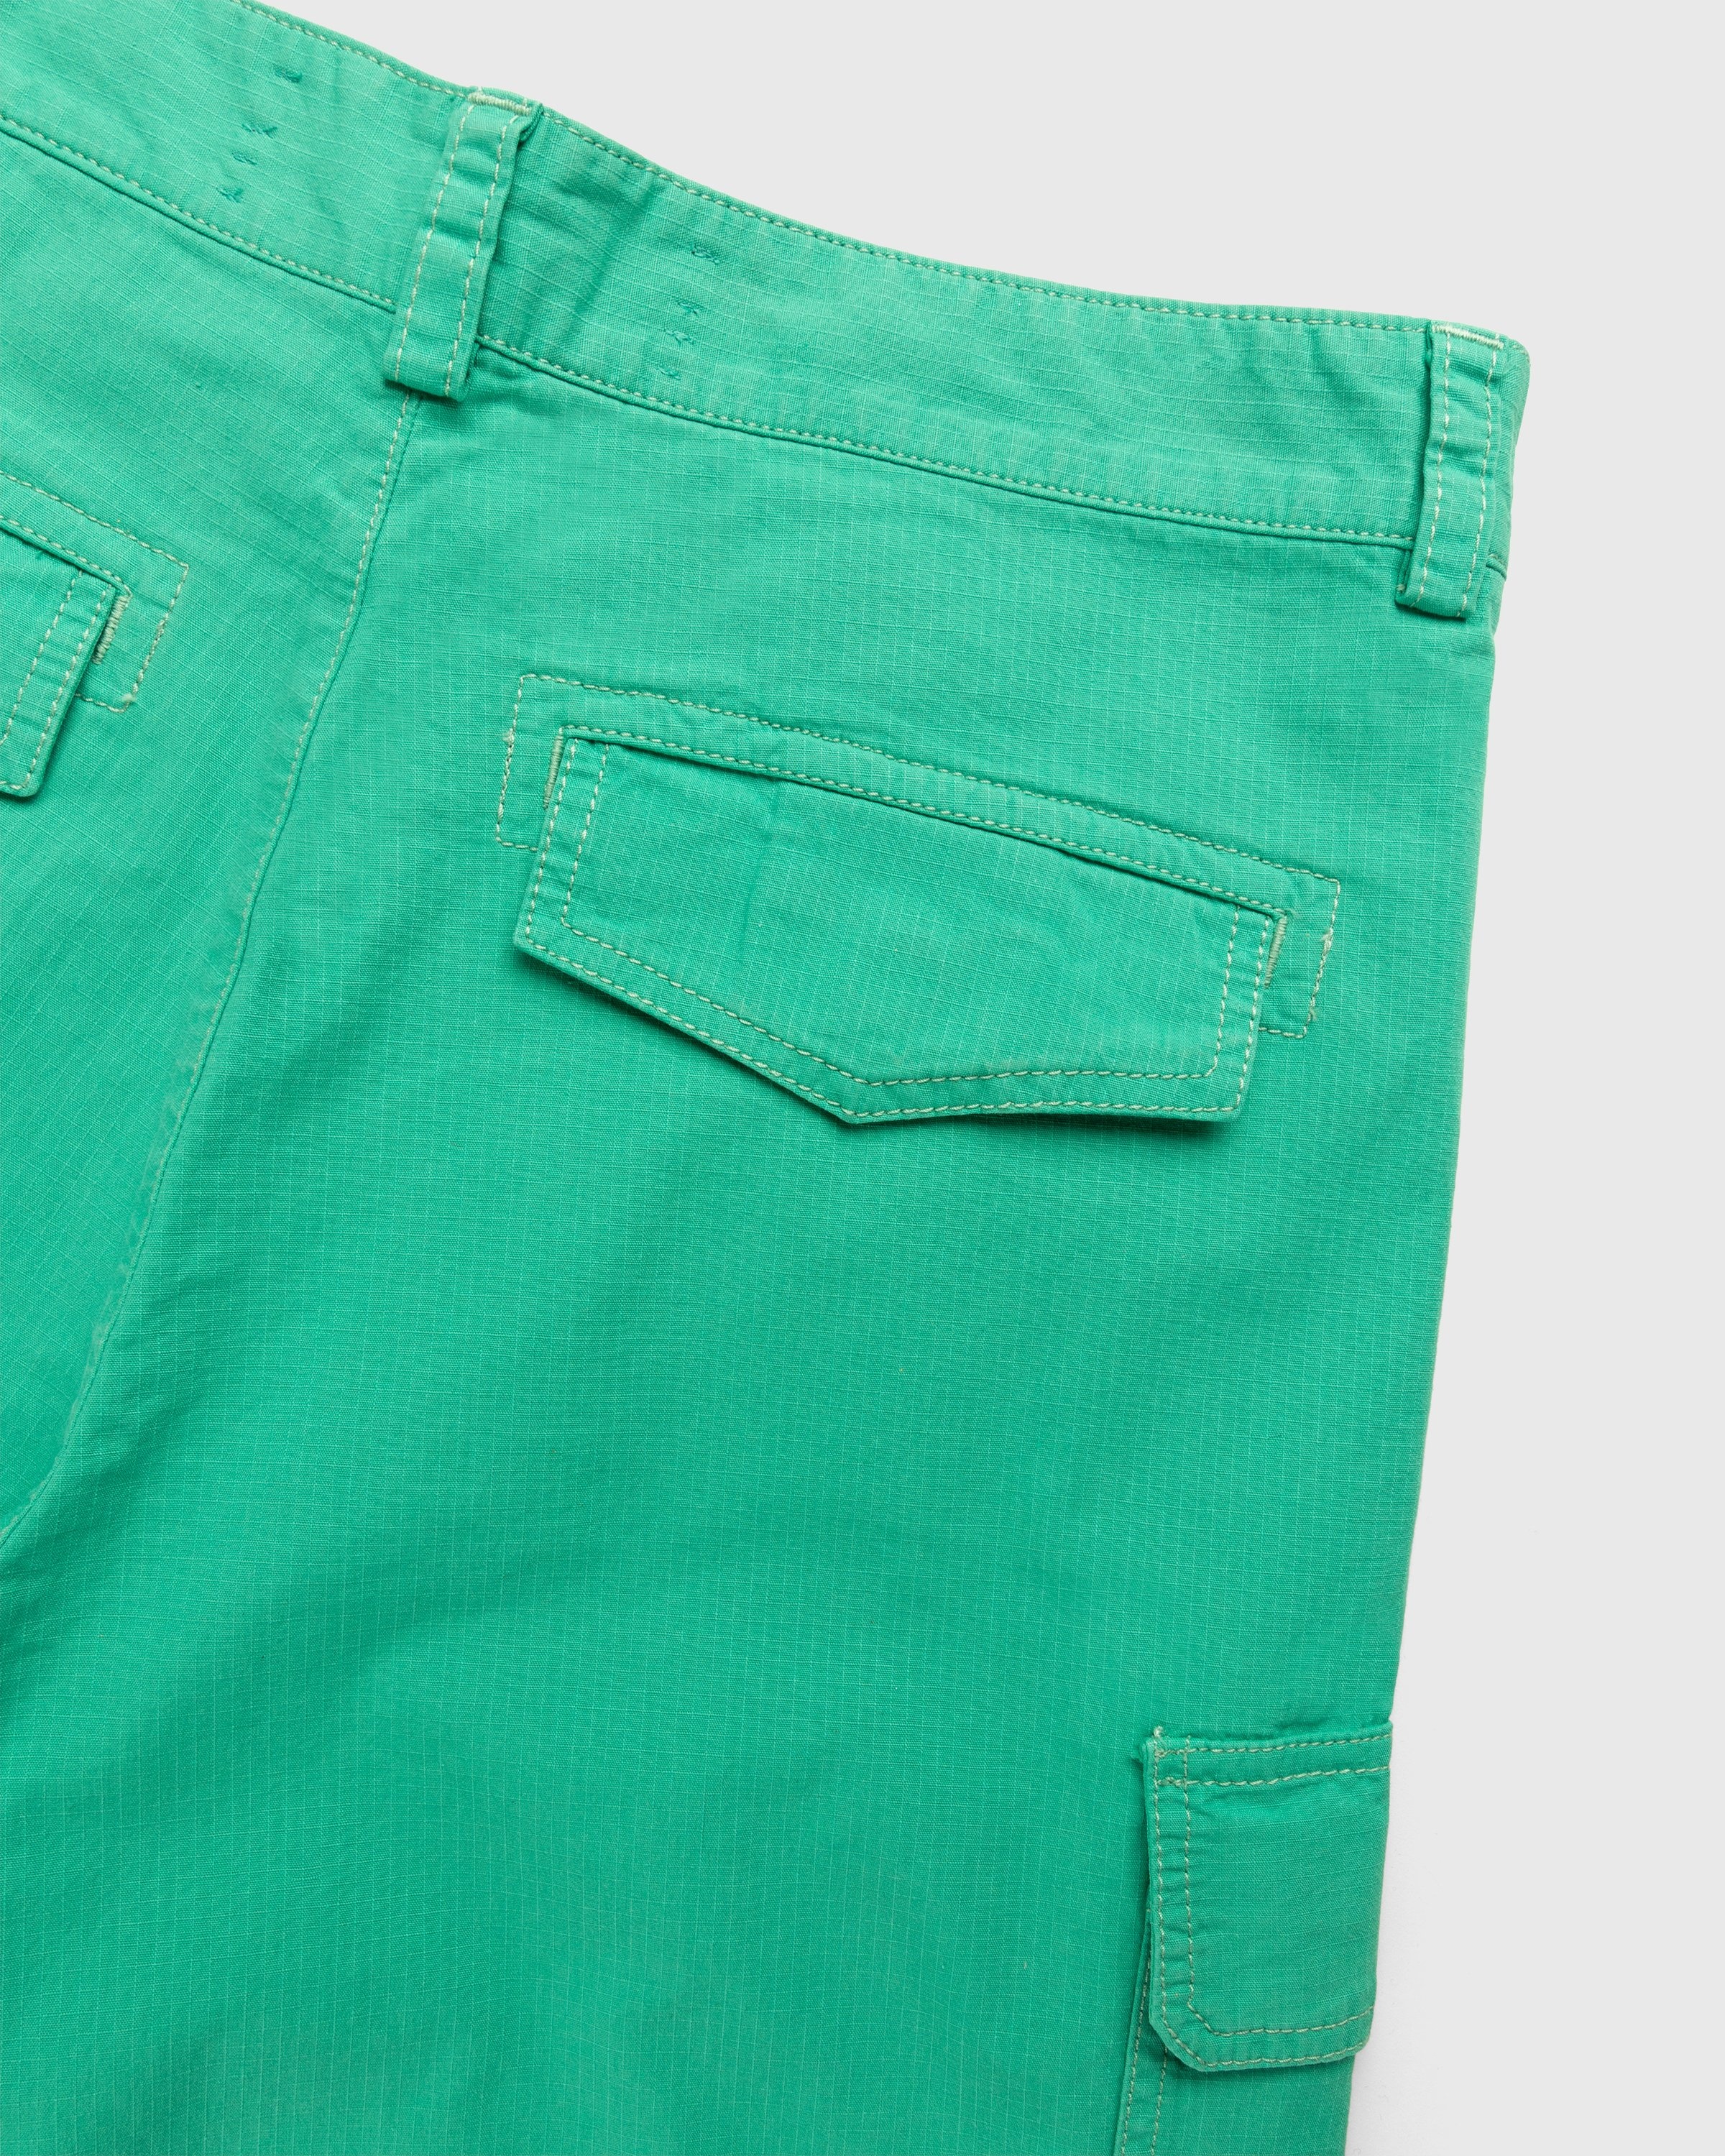 JACQUEMUS – Le Pantalon Peche Green - Trousers - Green - Image 7